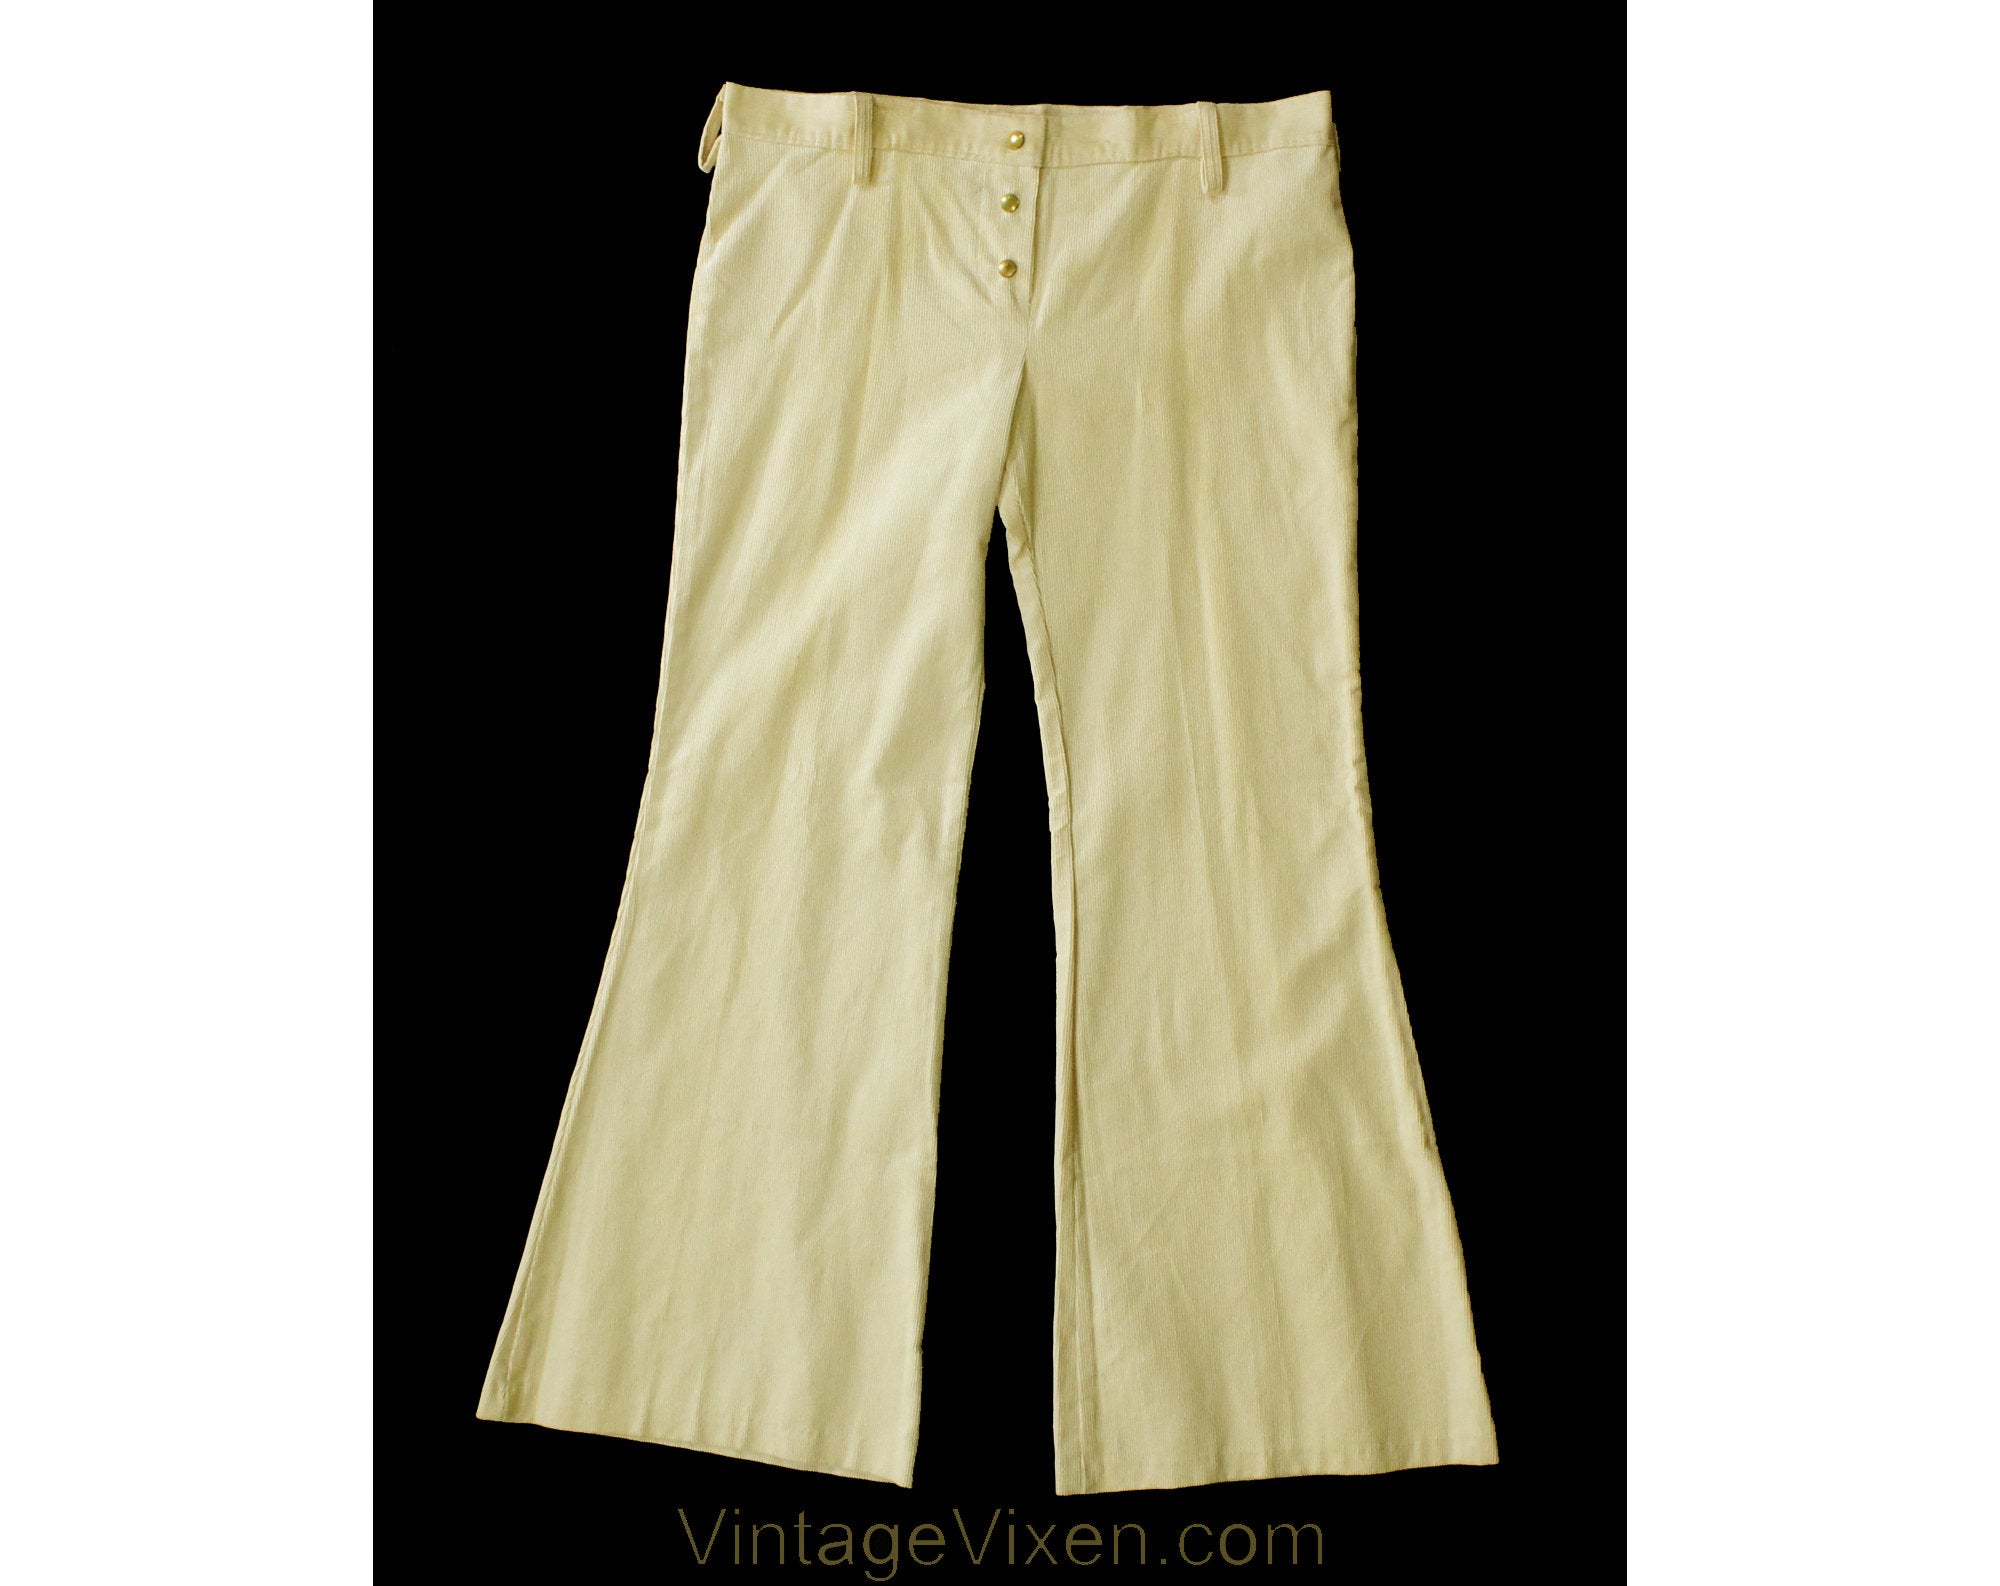 Size 10 Corduroy Bellbottom Pants - Ladies 1970s Low Rise Cotton